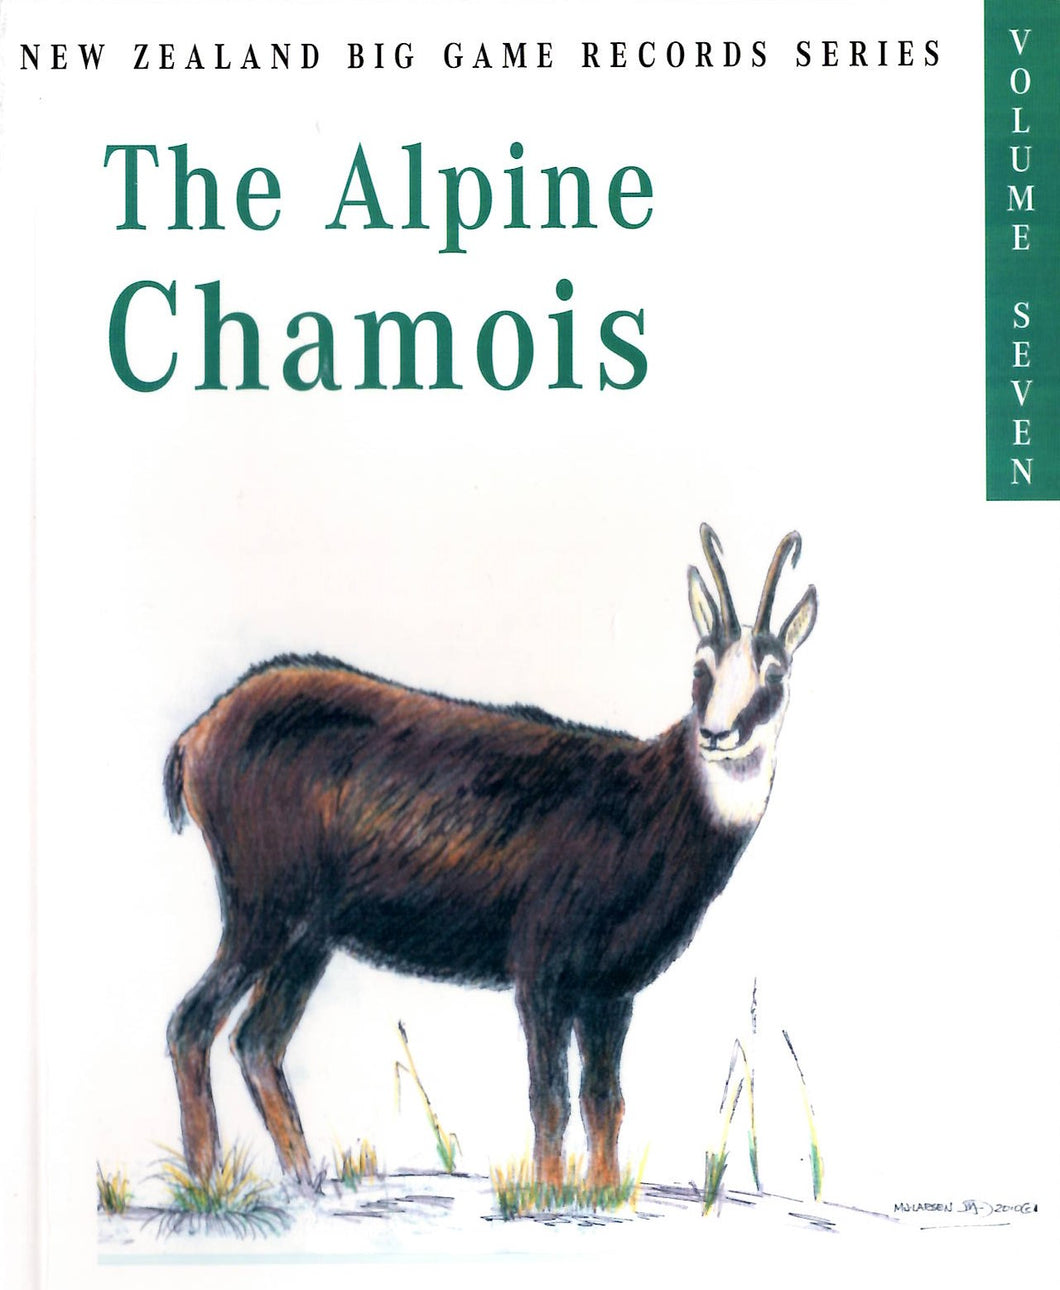 The Alpine Chamois